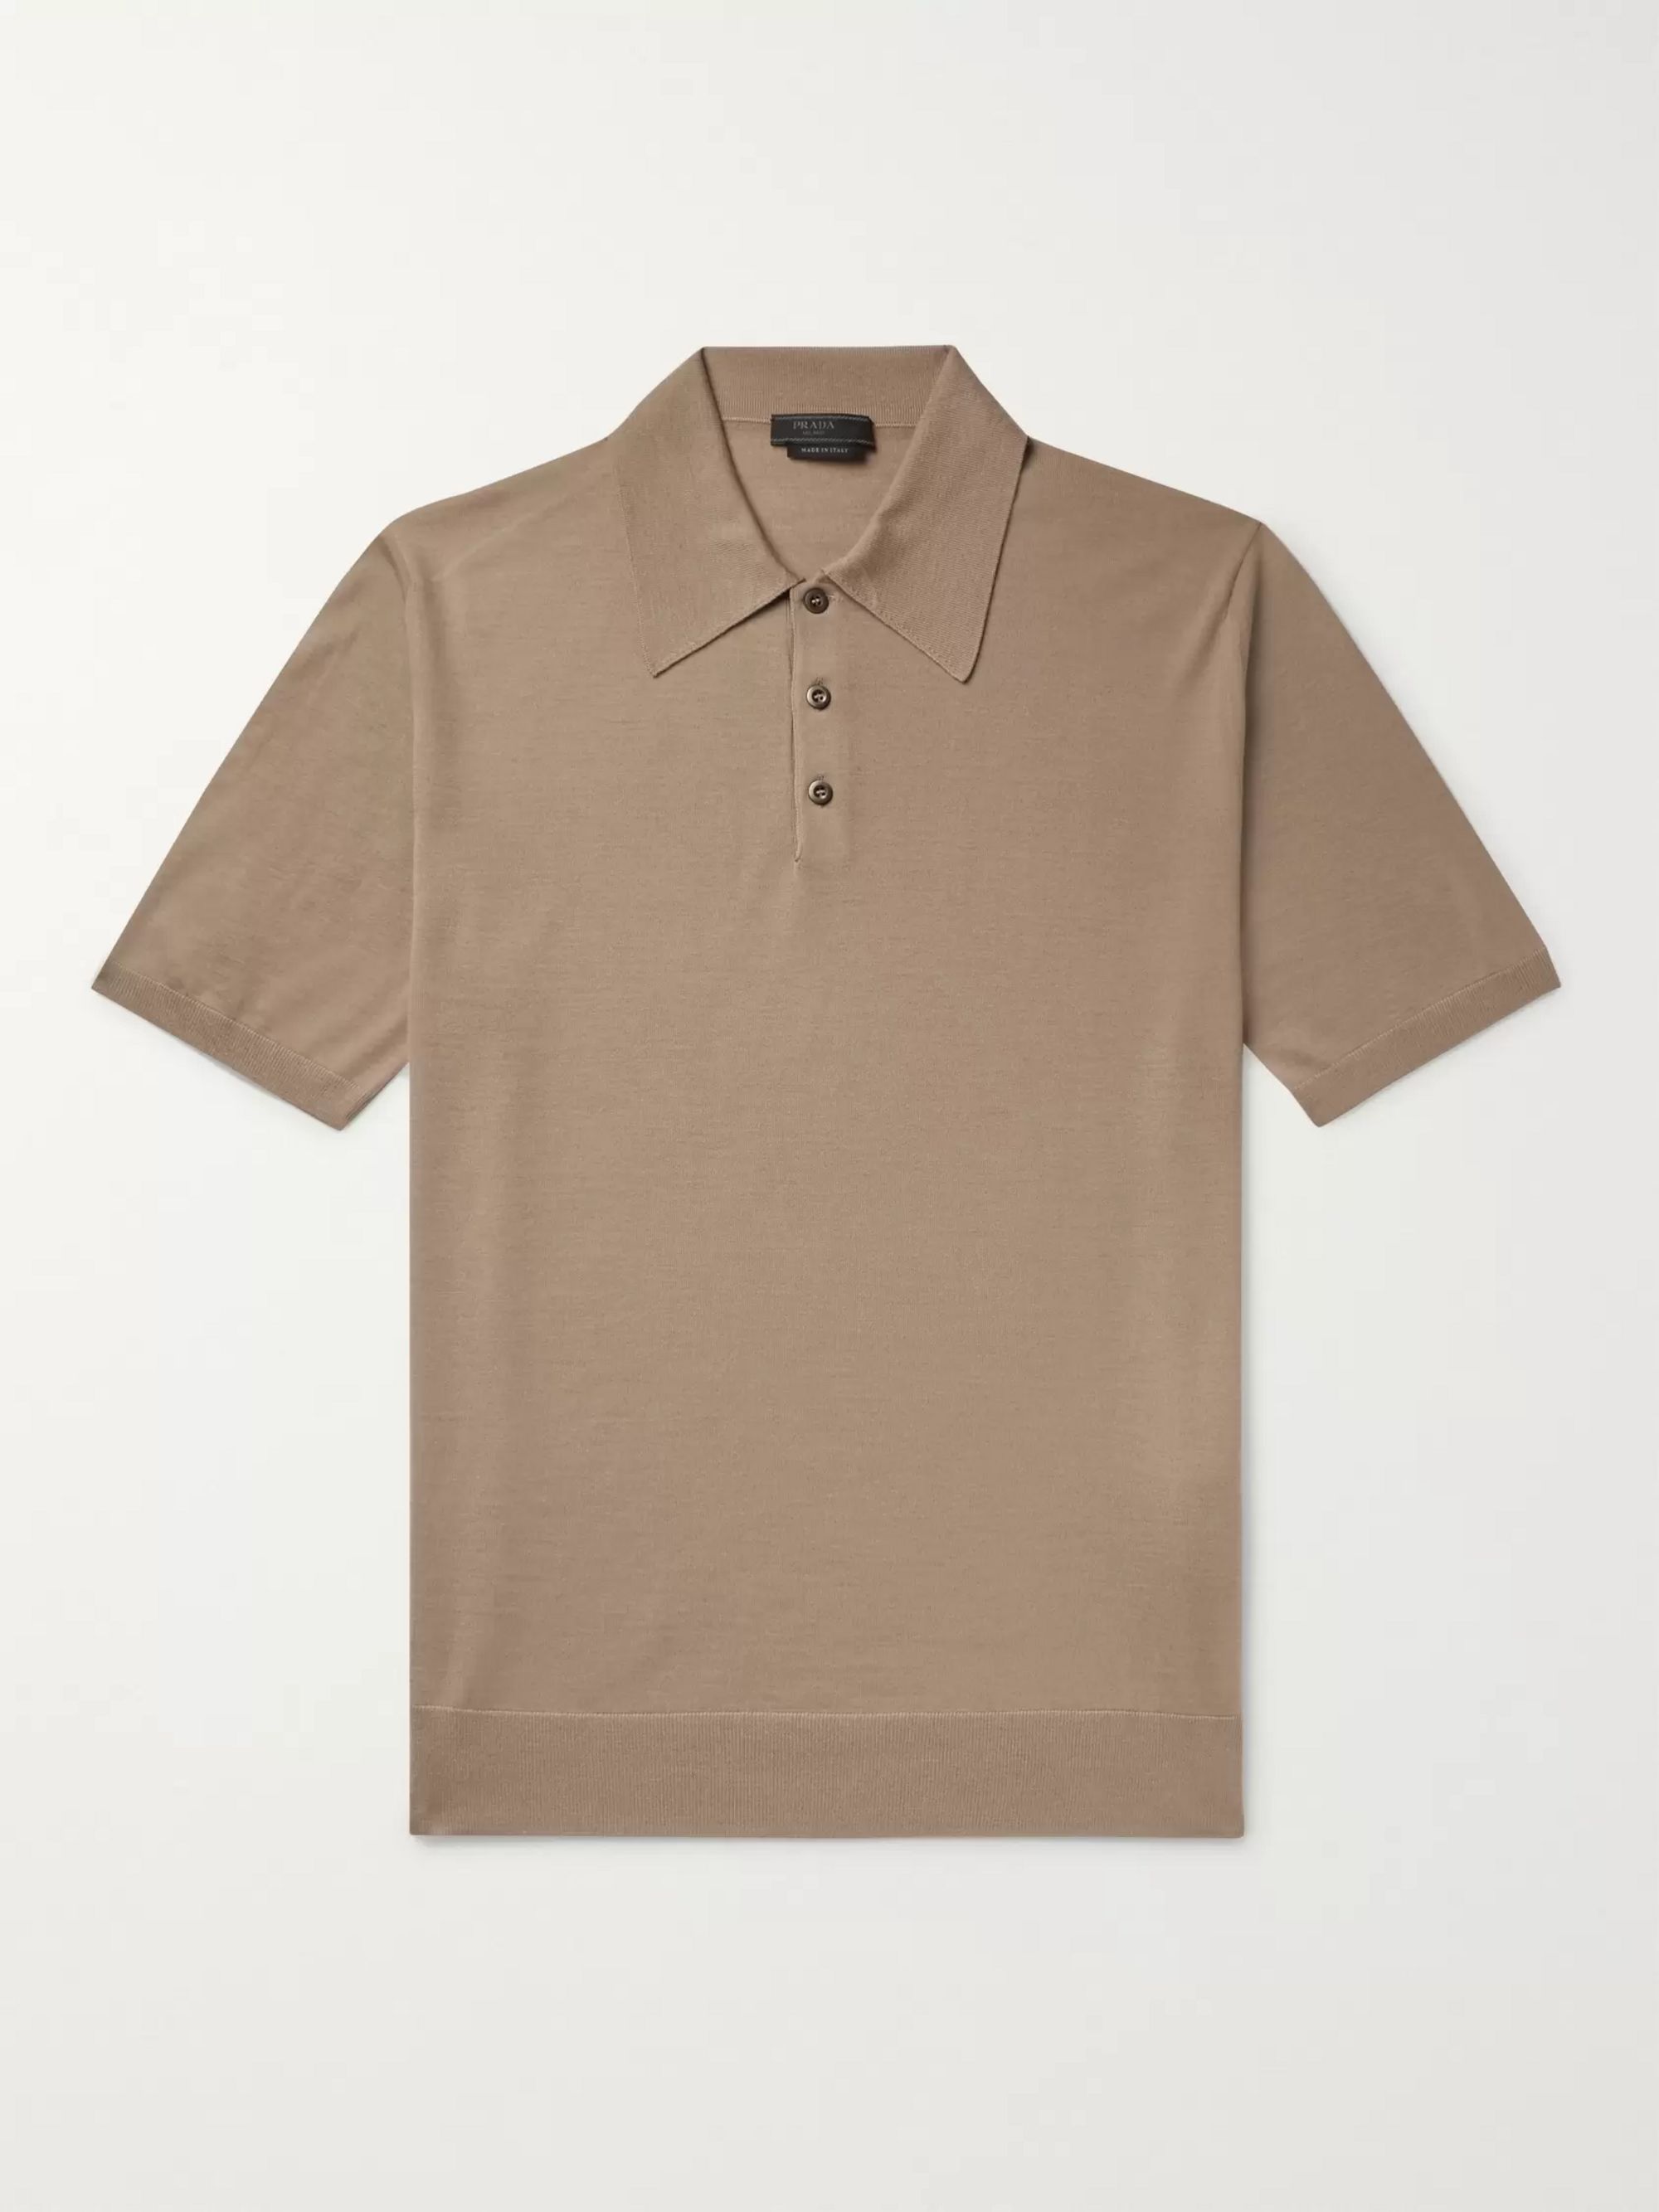 Prada Polo Shirt Size Chart